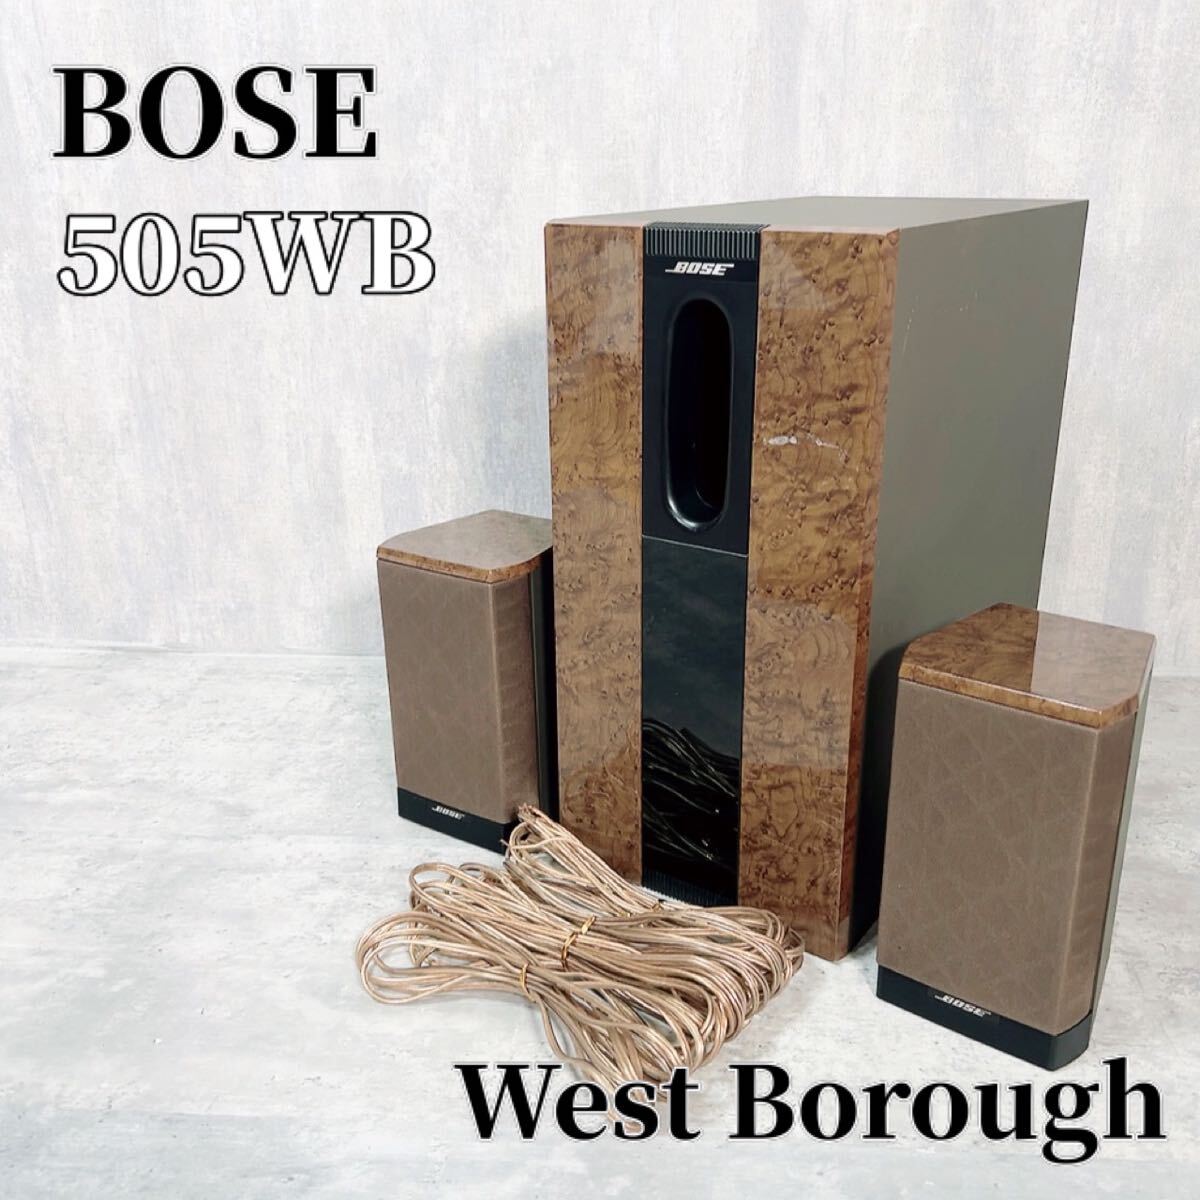 Z164 BOSE ボーズ 505WB West Borough スピーカーシステム サテライトスピーカー ウーハー 純正ケーブル_画像1